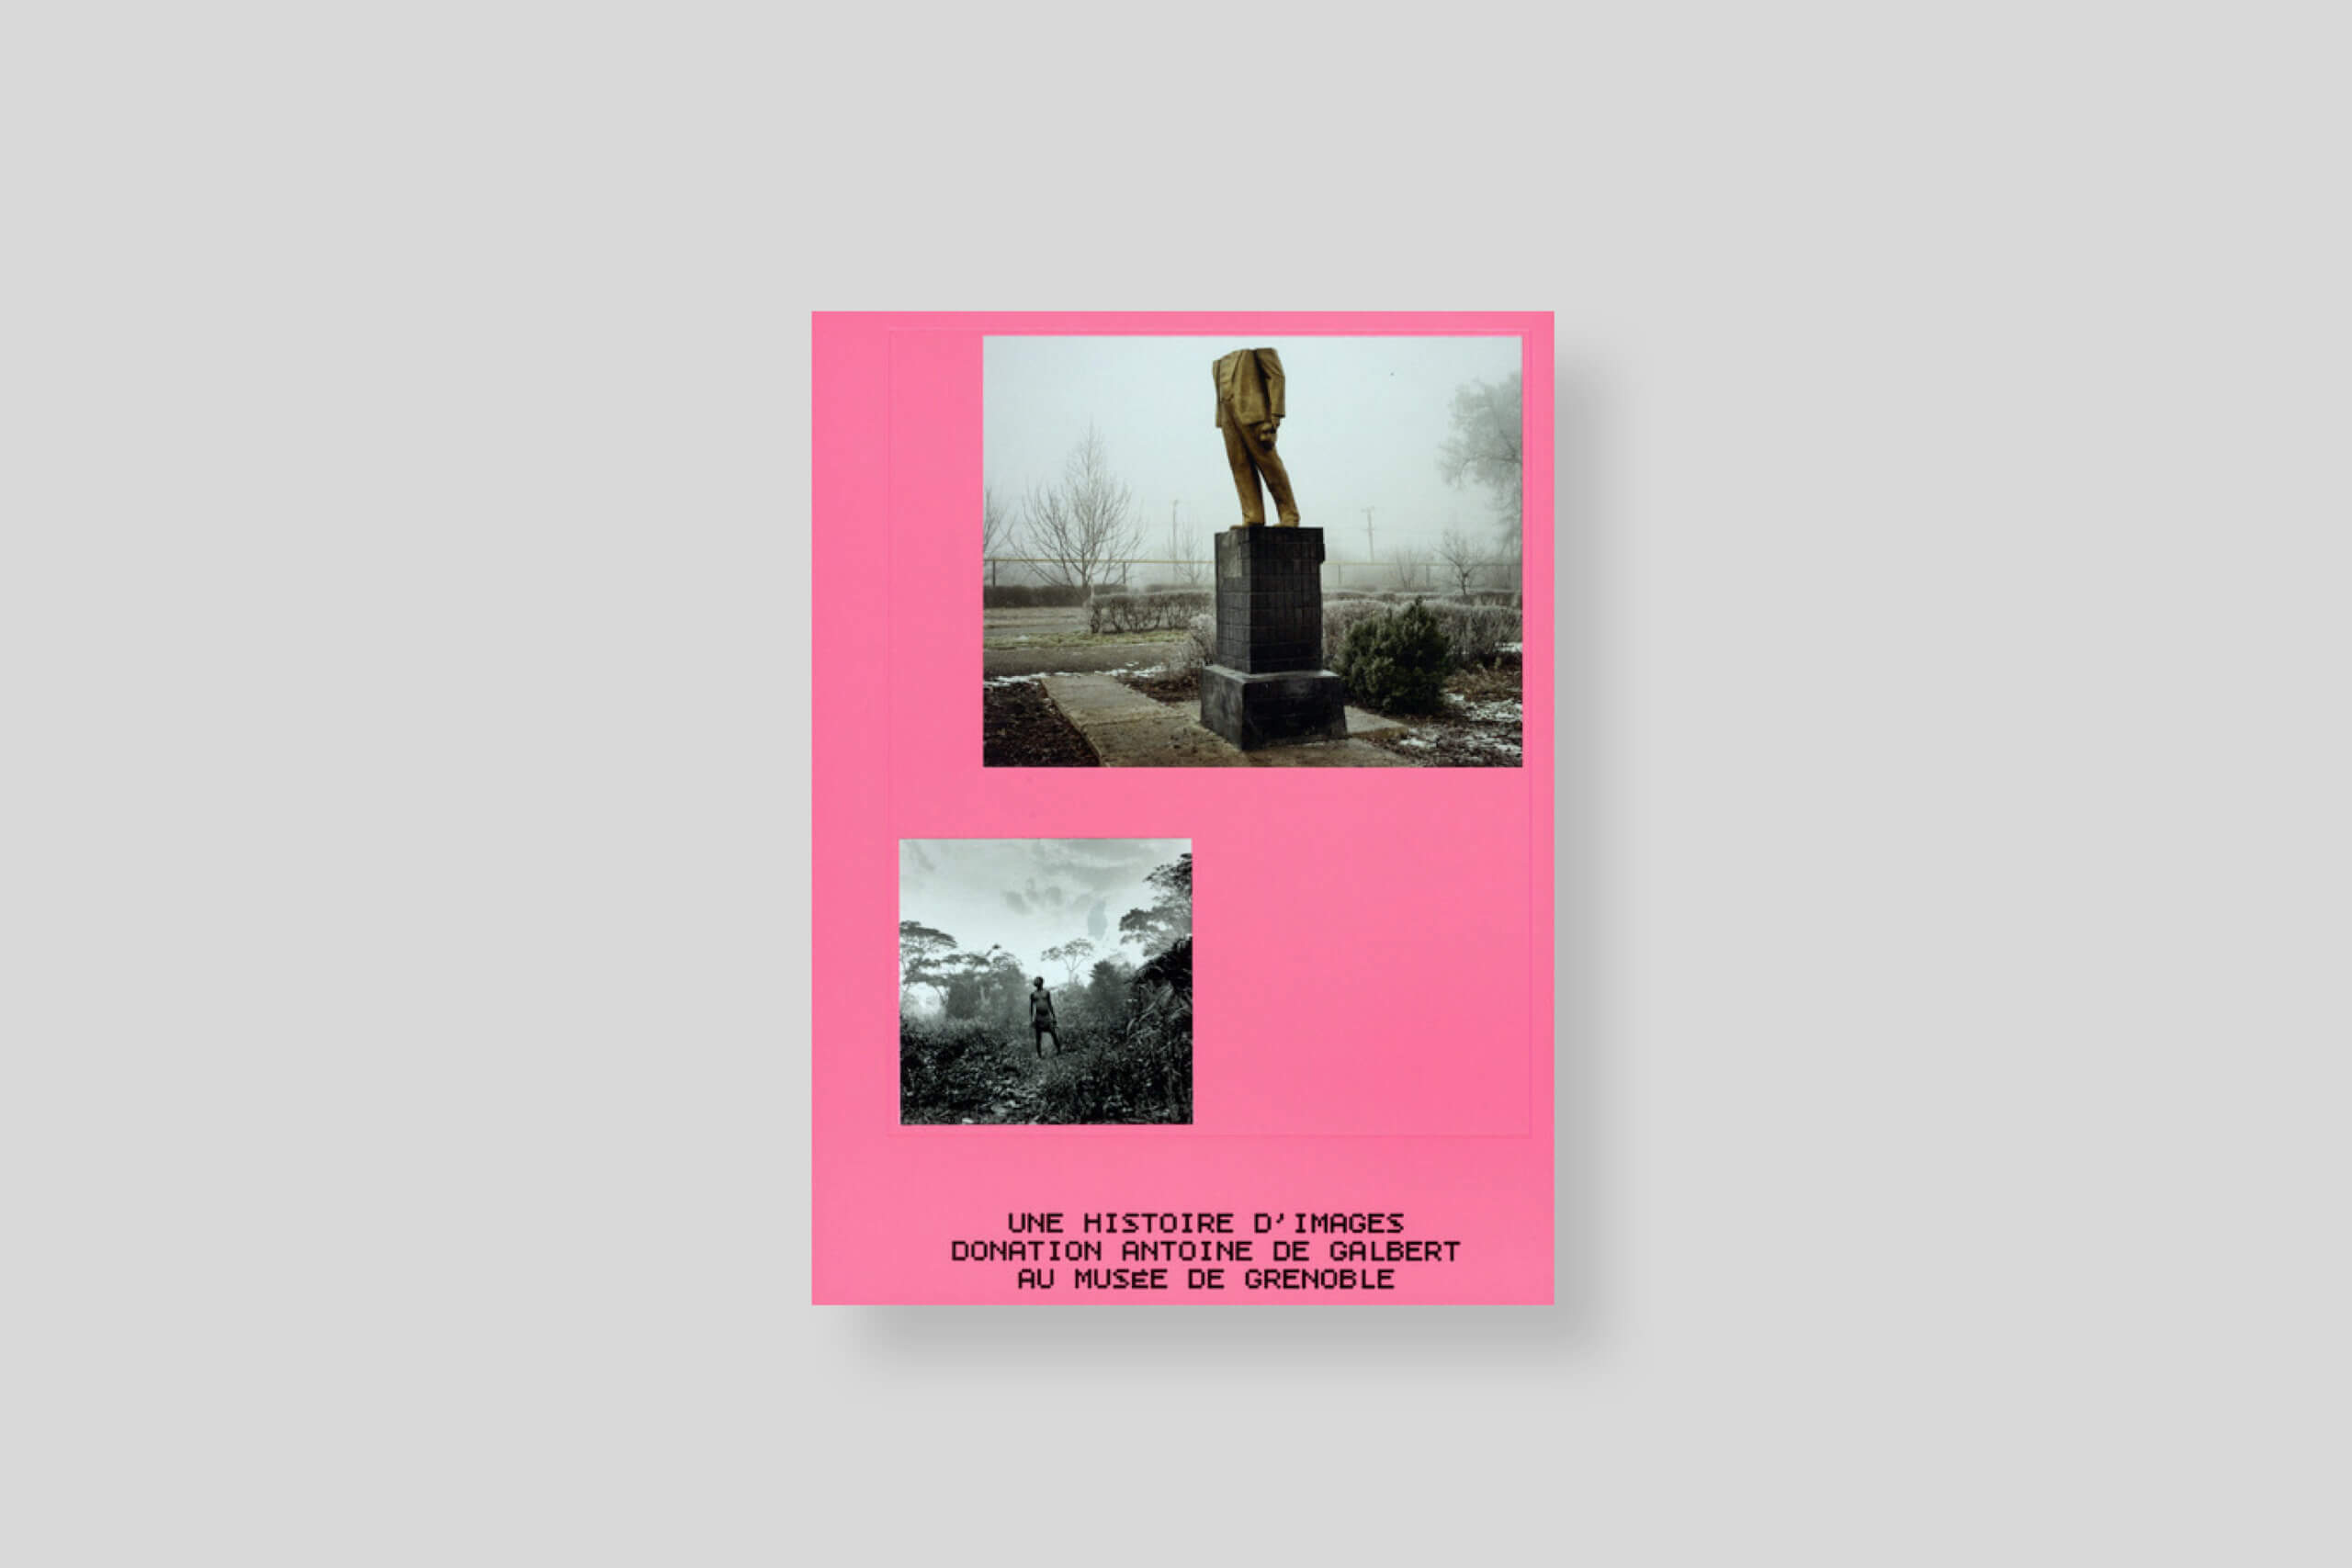 une-histoire-d-images-musee-de-grenoble-galbert-empire-books-cover-1